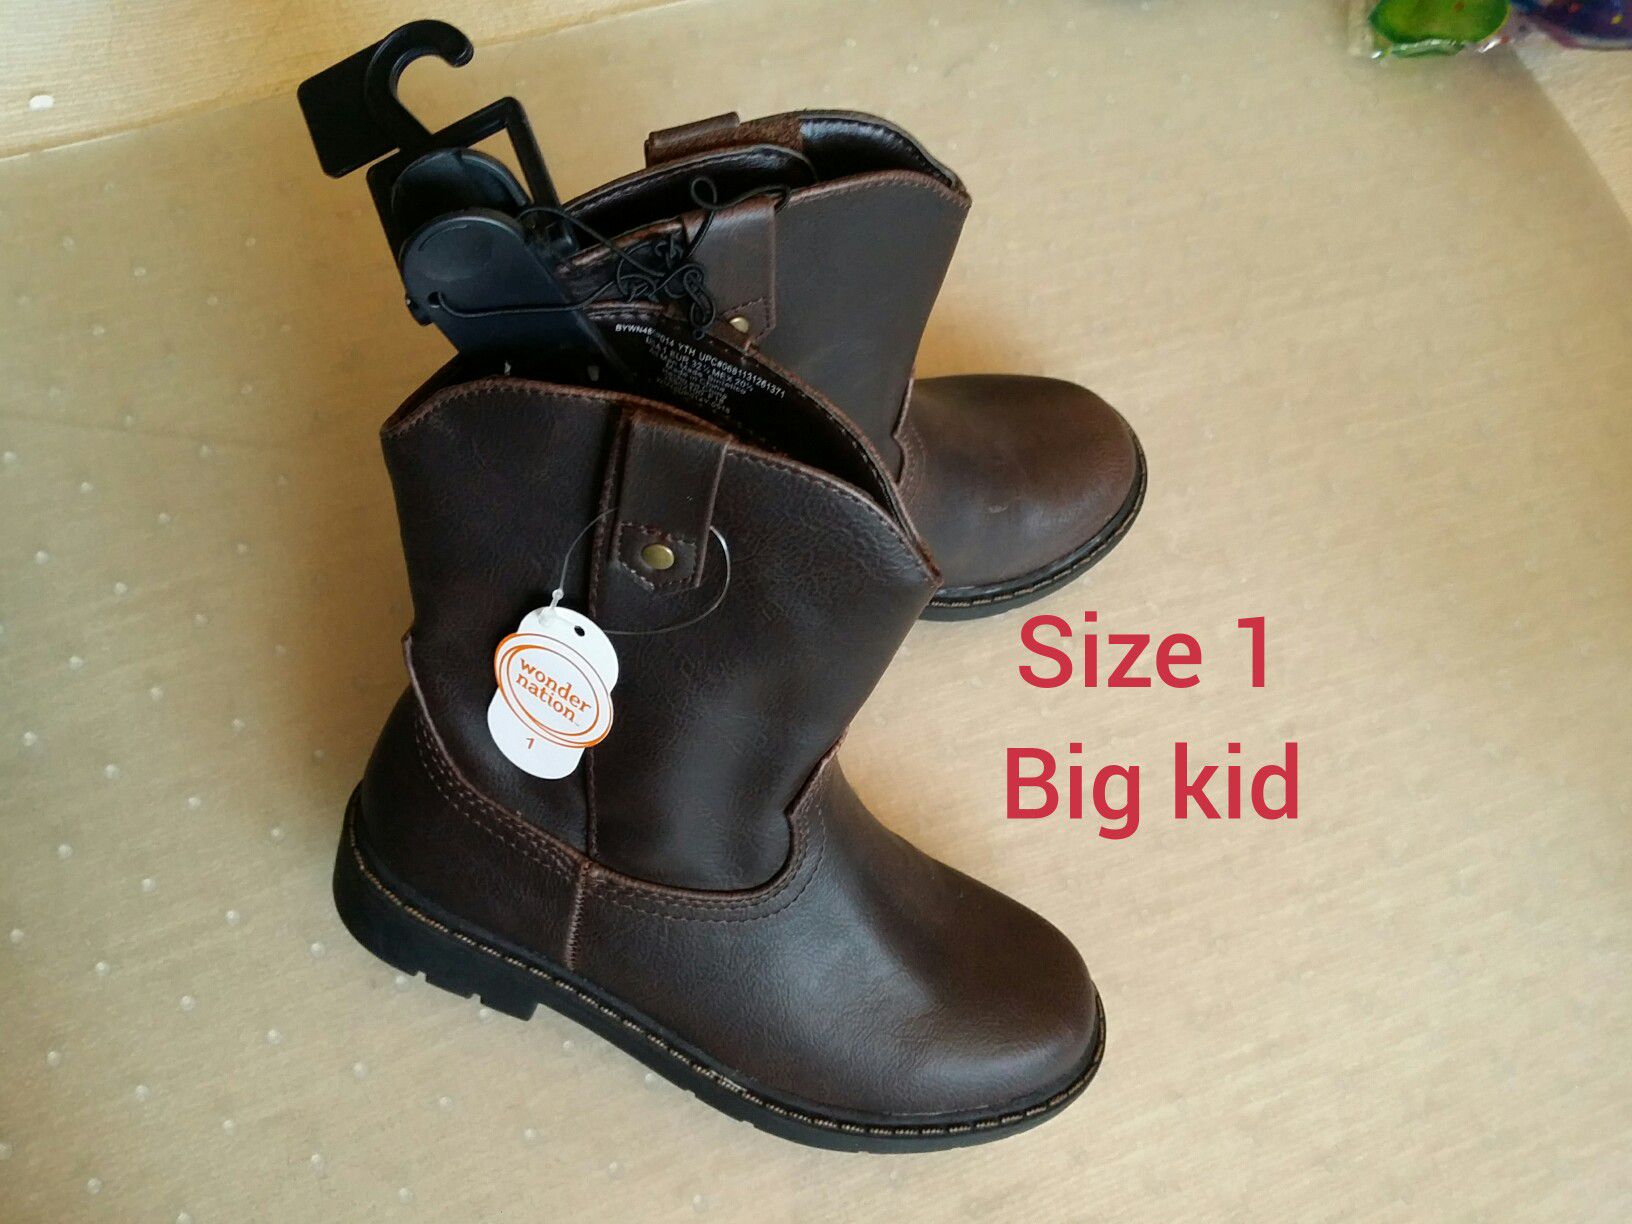 Brand new big kid boots. Size 1